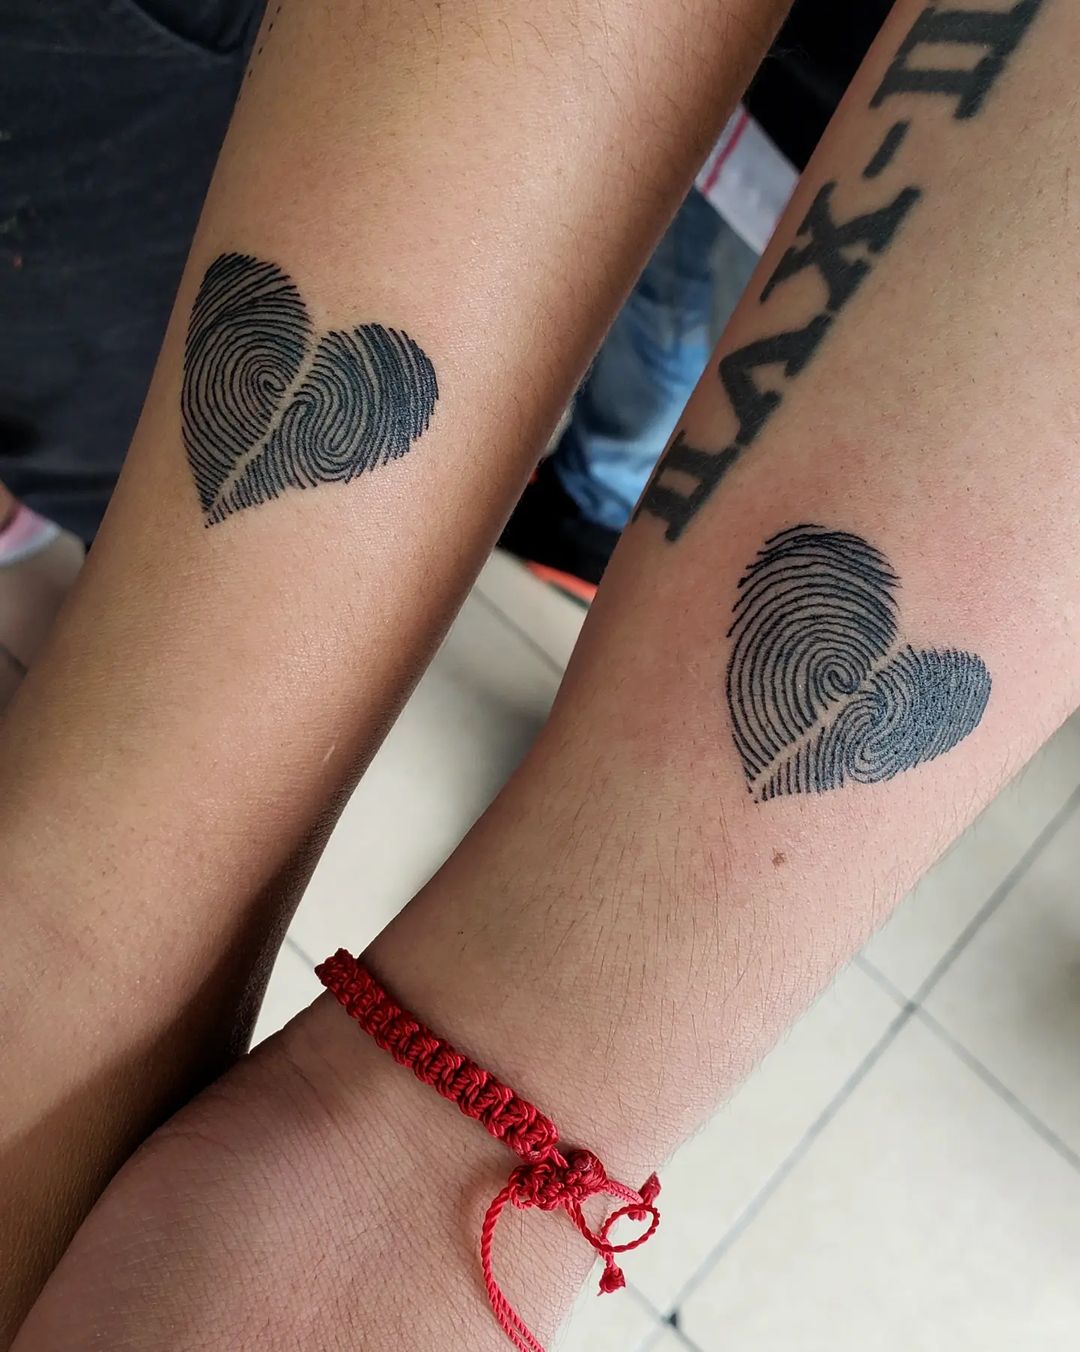 30 couple tattoo ideasboyfriendgirlfriend tattoos collectionhubby  wifey tattoos images  YouTube